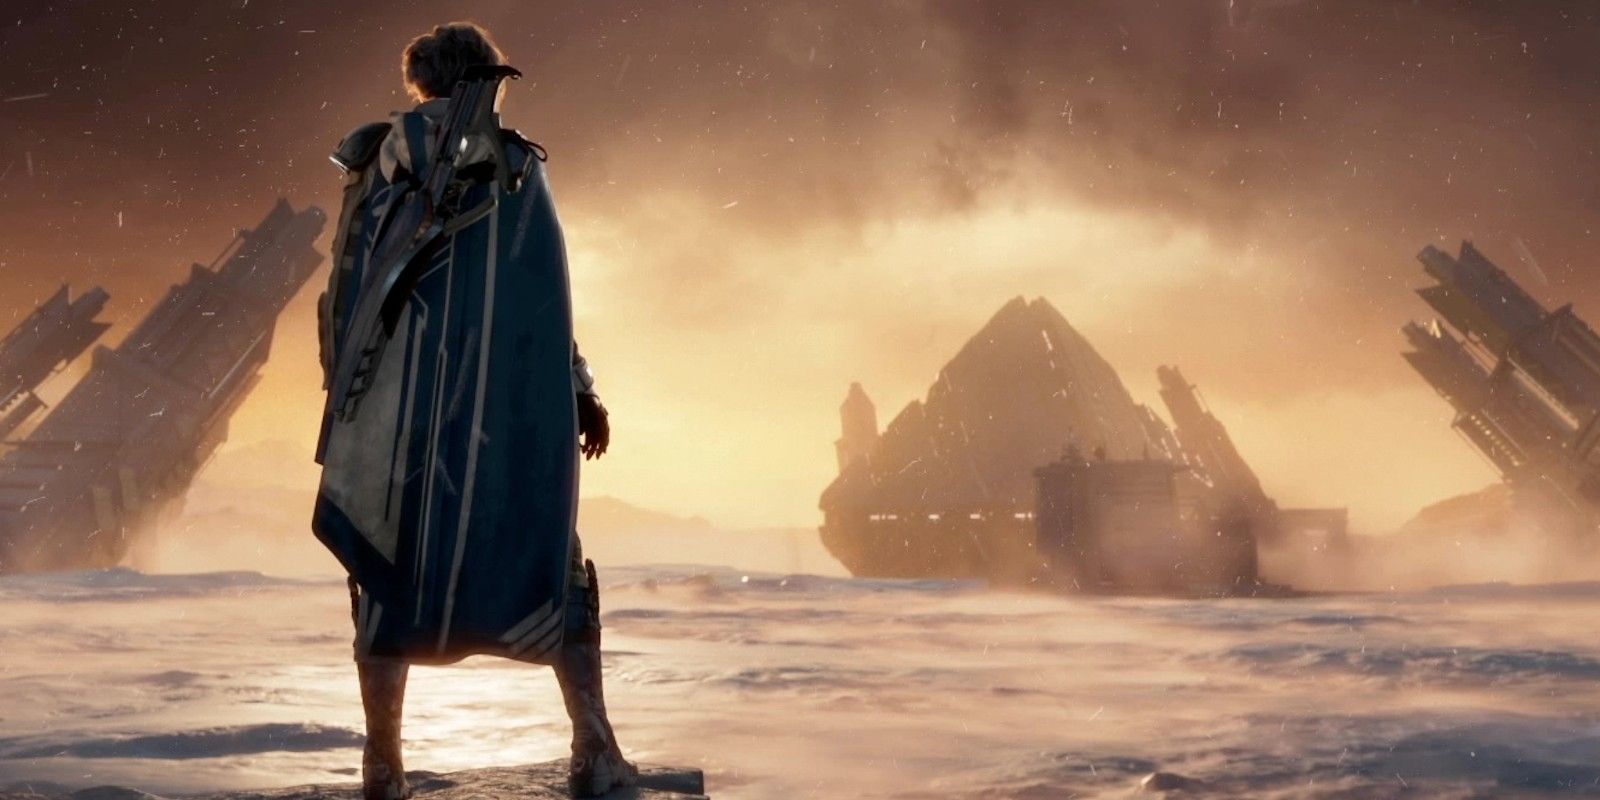 Ana Bray standing on Mars in Destiny 2